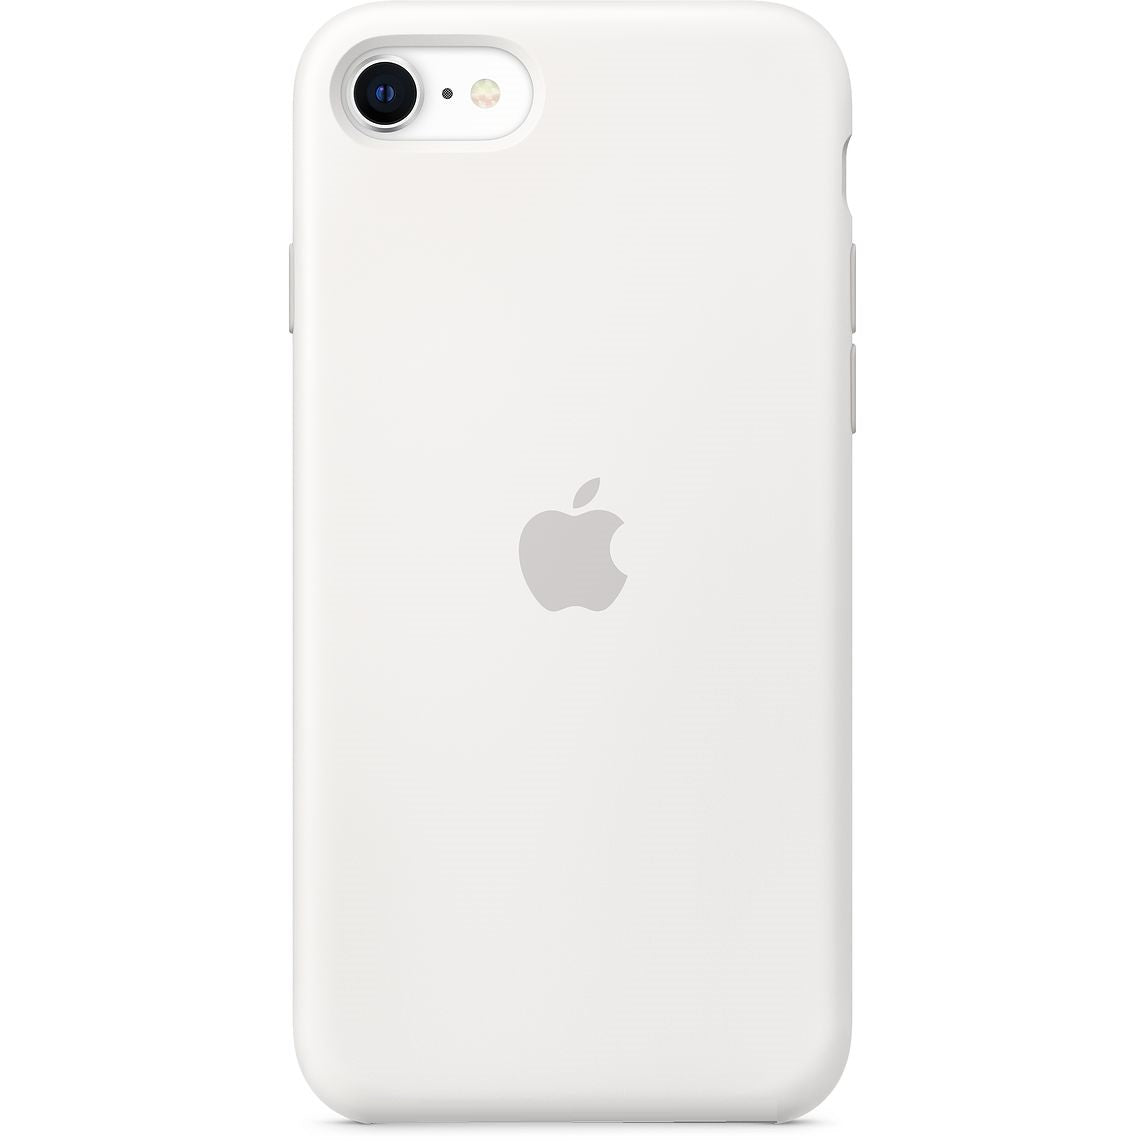 iPhone 6/6s Original Liquid Silicon Case with Logo - White